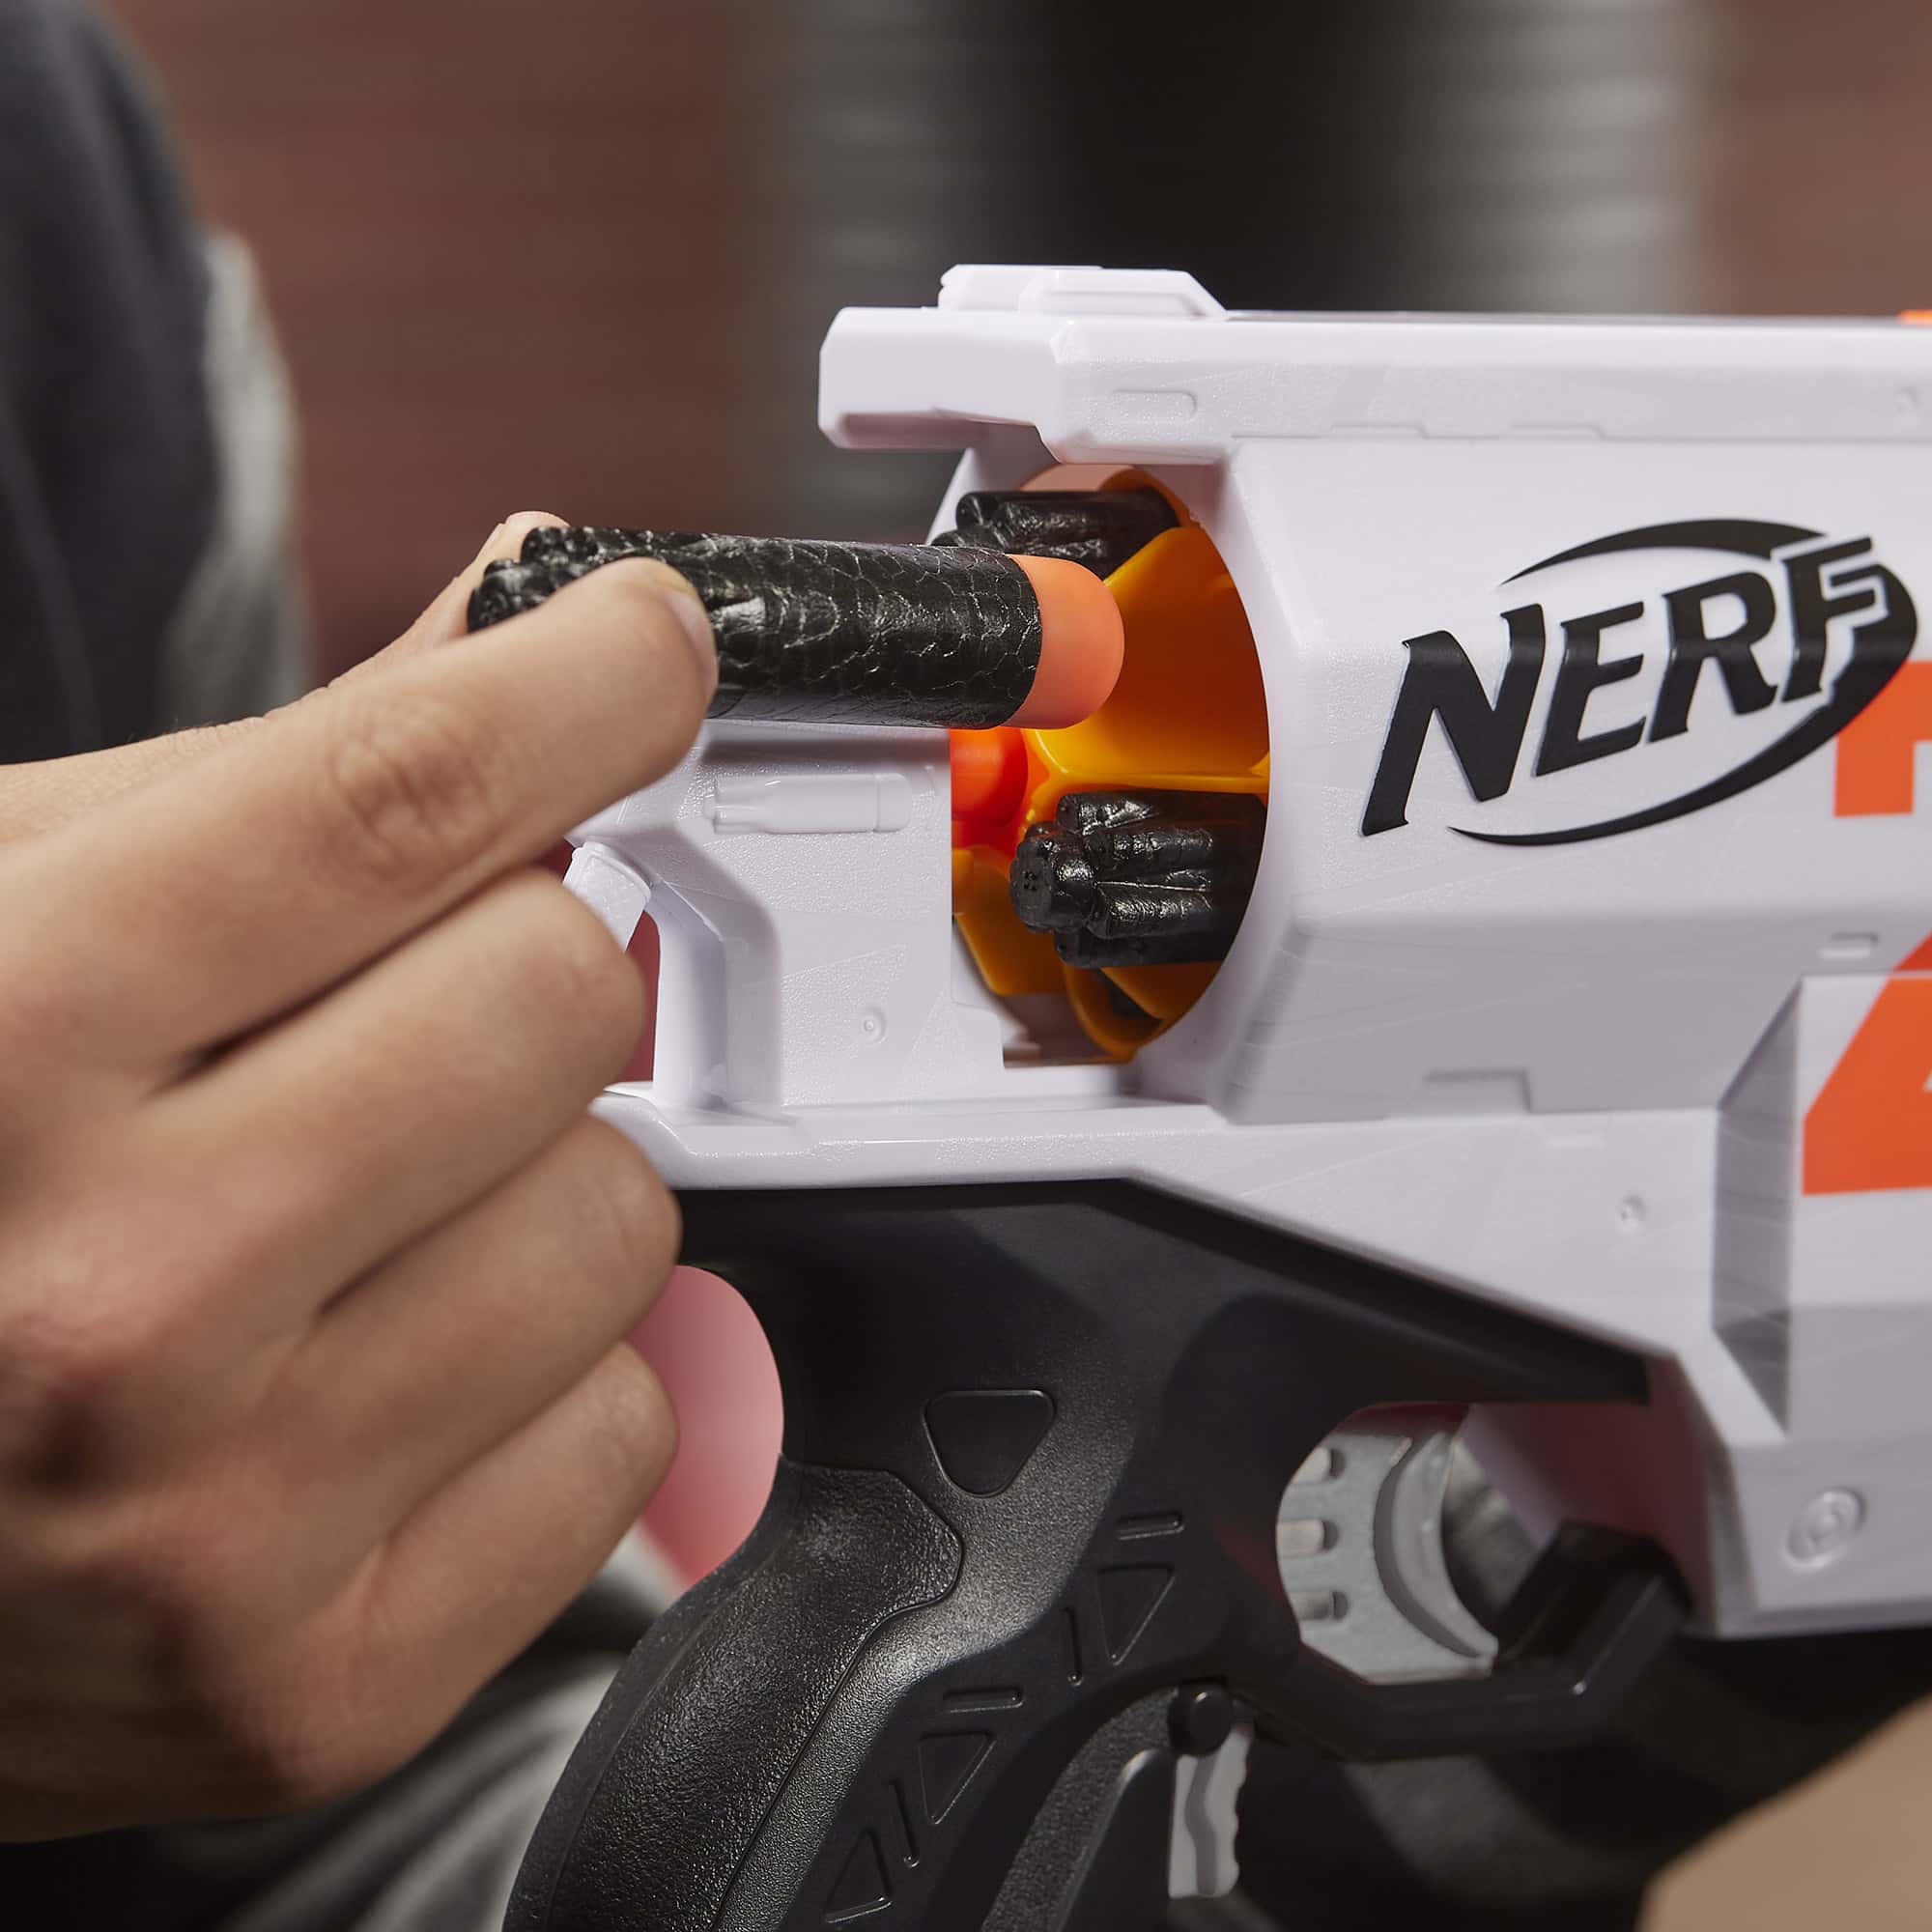 Nerf - Ultra Two Blaster